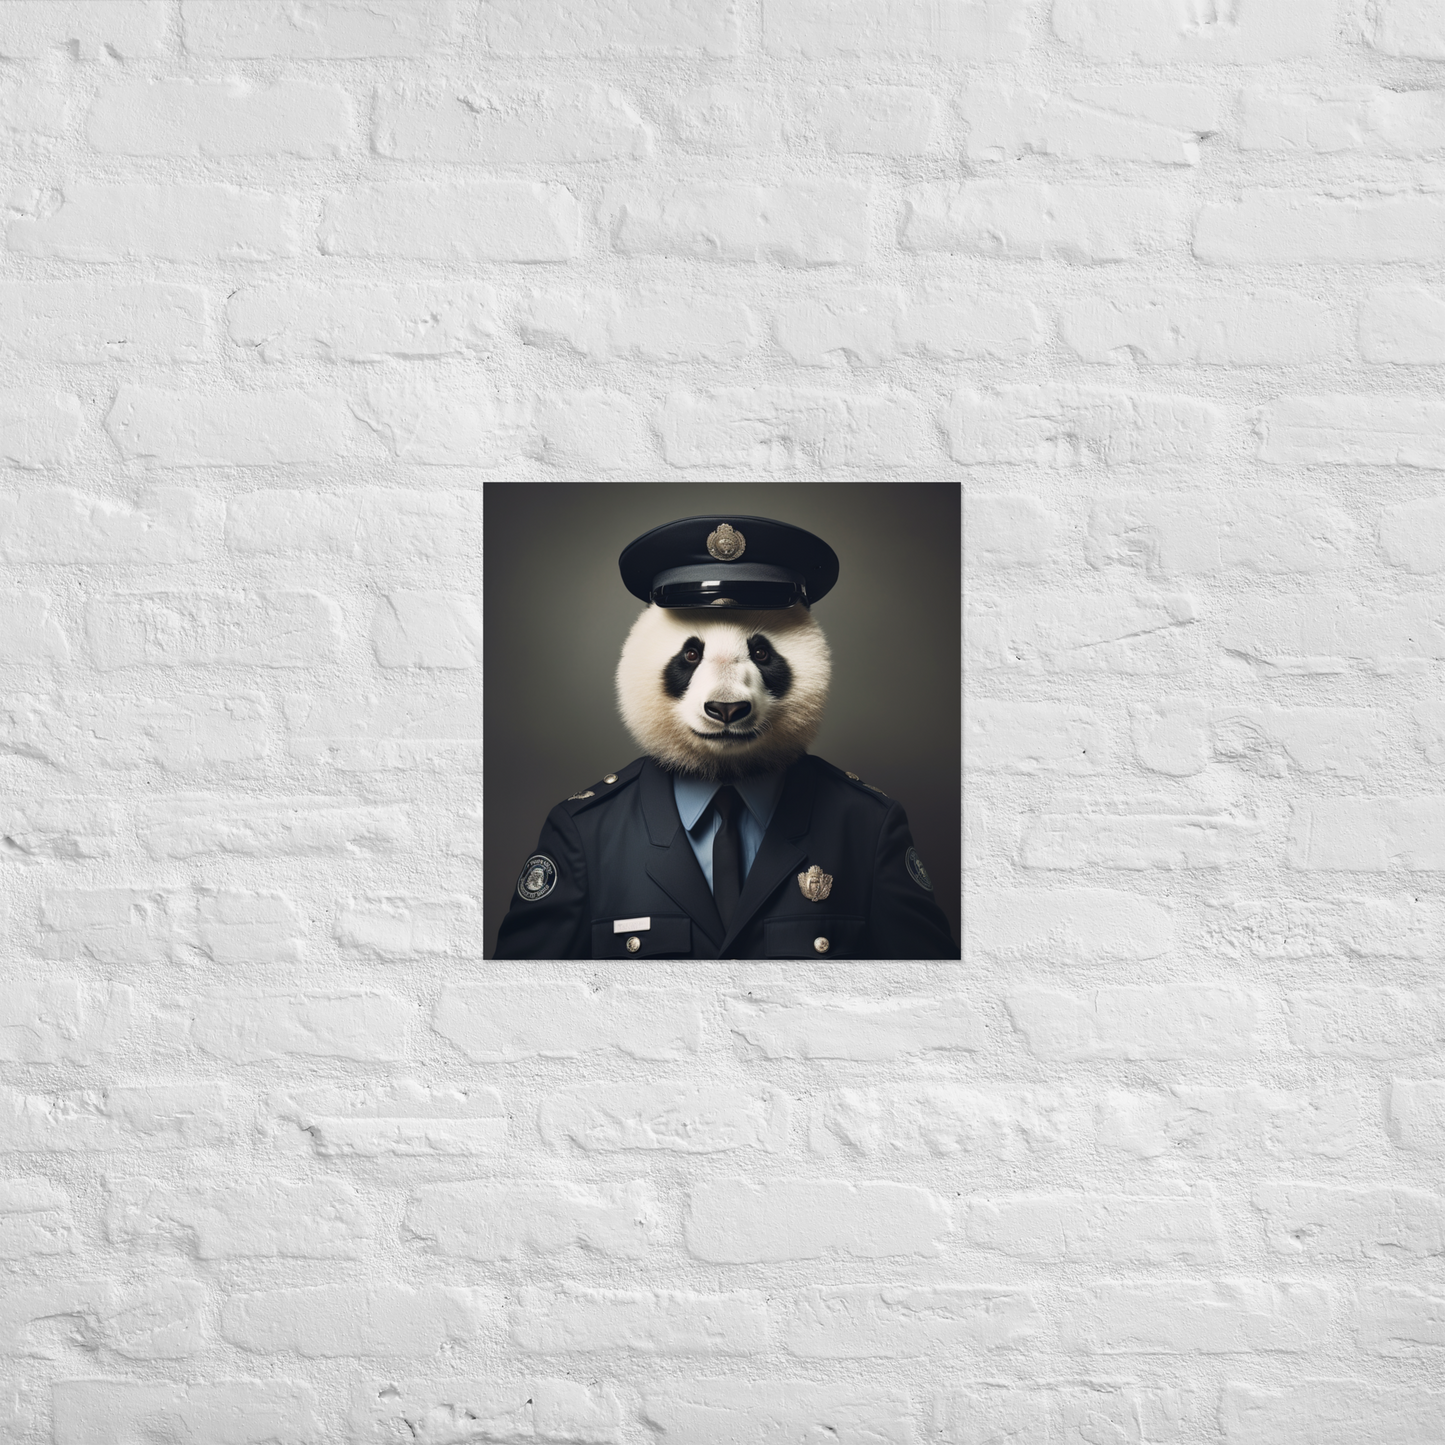 Panda Police Officer Poster